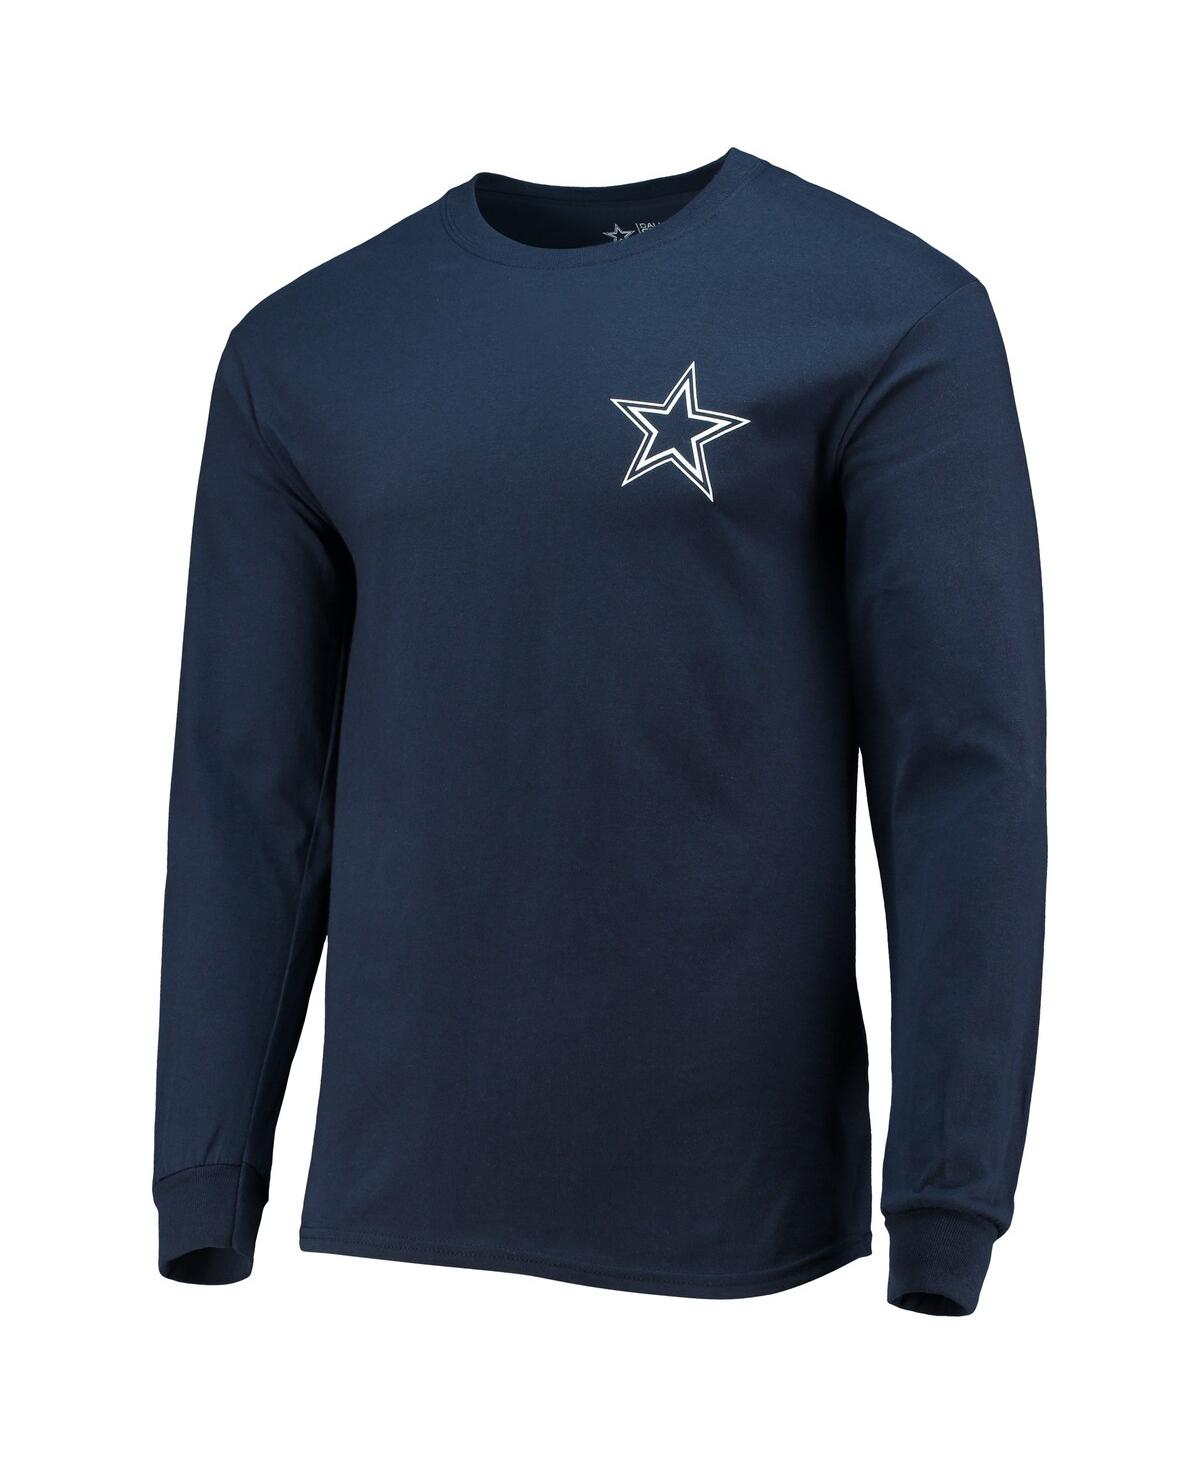 Shop Fanatics Men's  Navy Dallas Cowboys #1 Dad Long Sleeve T-shirt